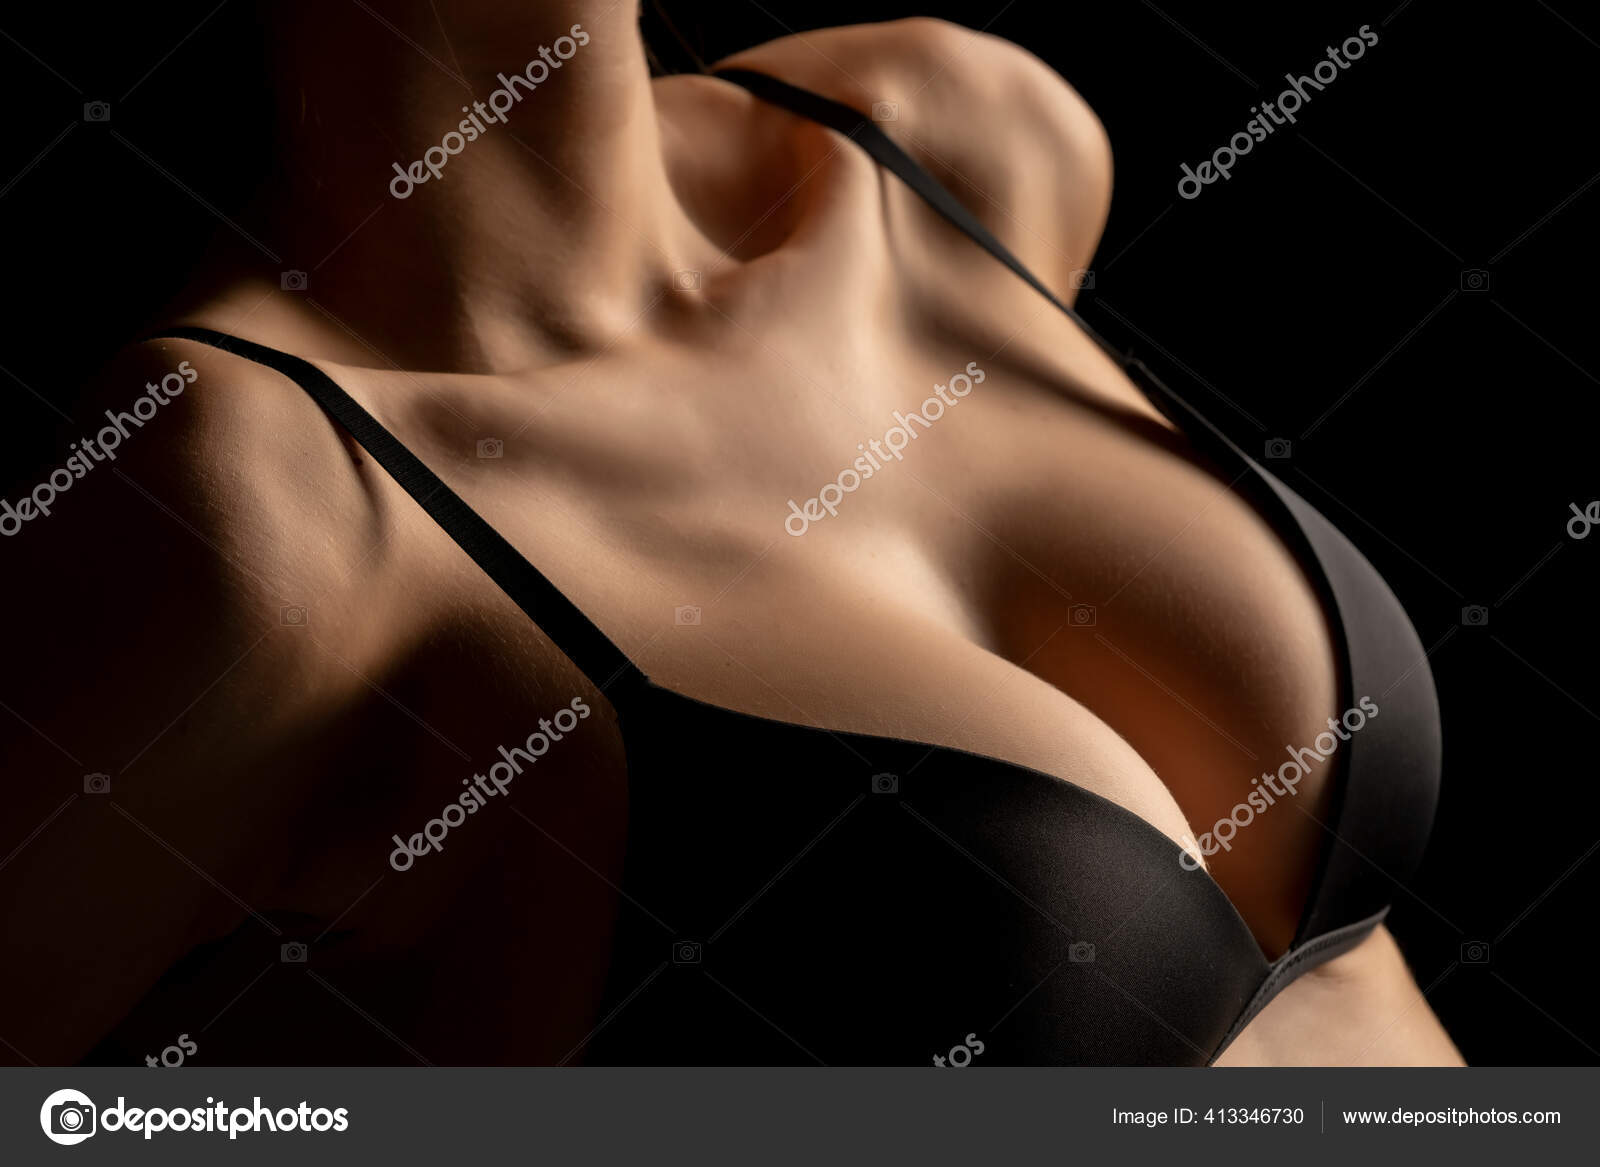 Woman Perfect Breasts Black Bra Black Background Stock Photo by ©VGeorgiev  413346730